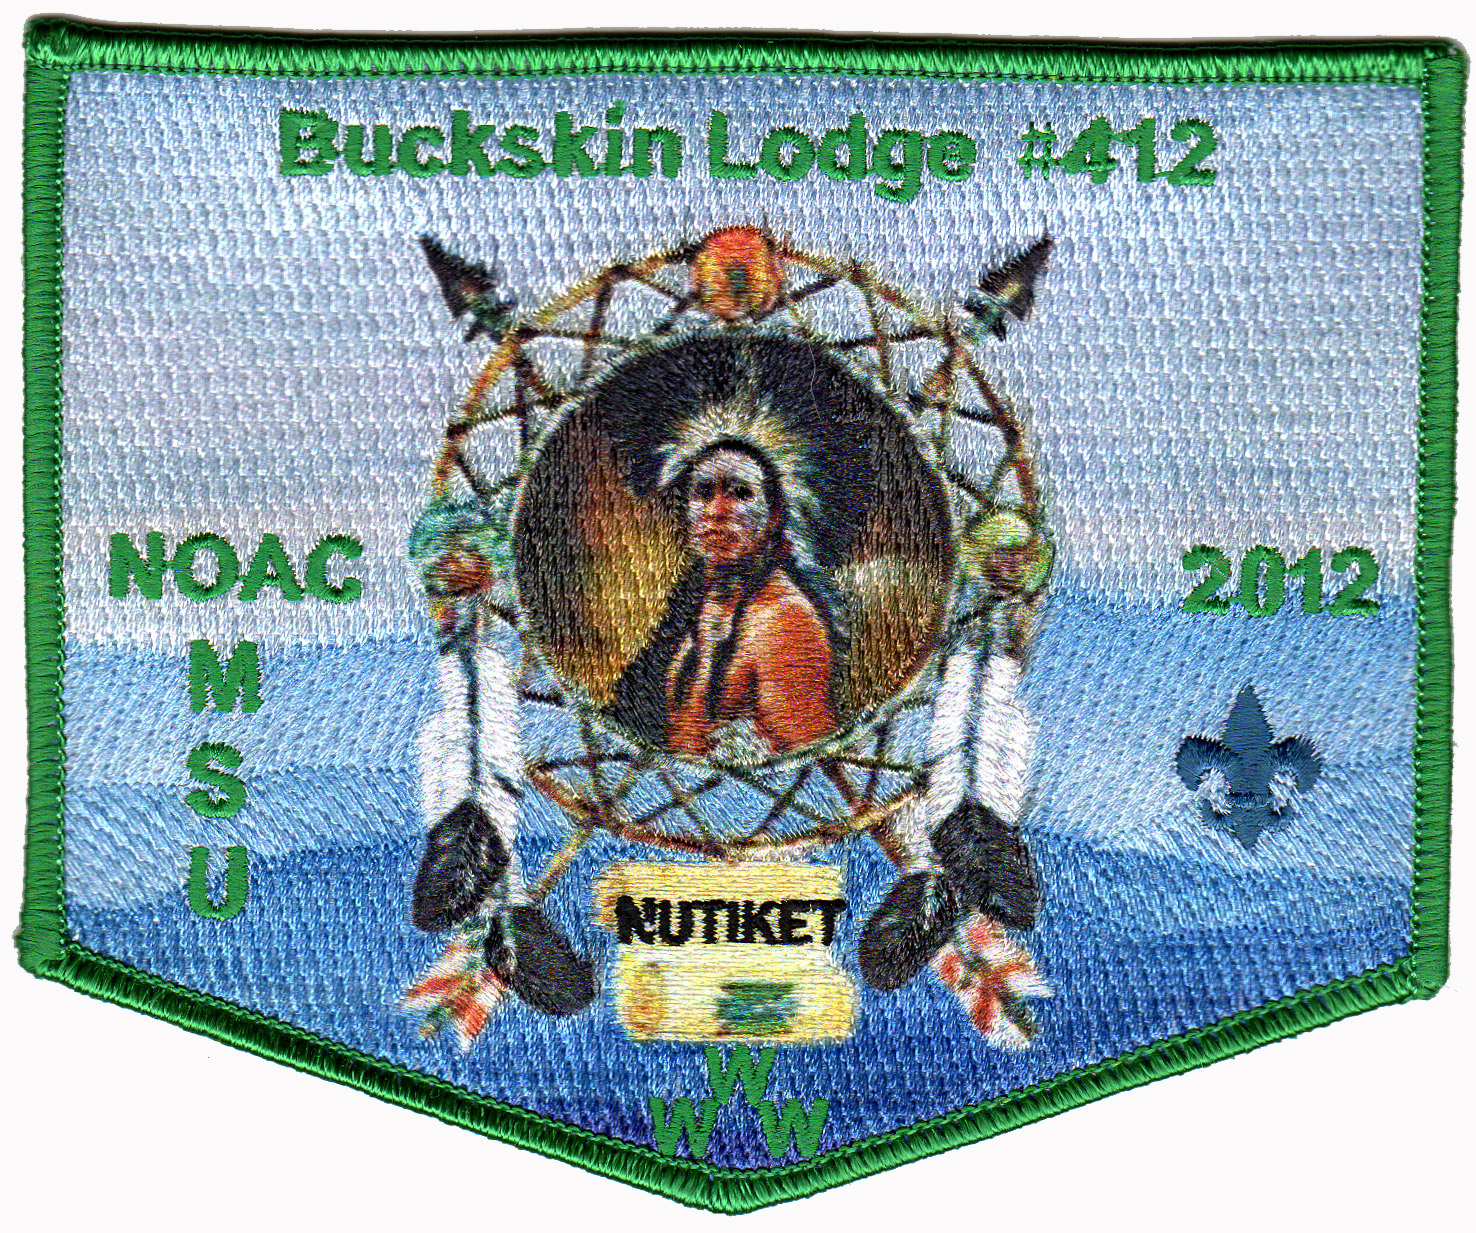 2012 NOAC pocket patch - Nutiket